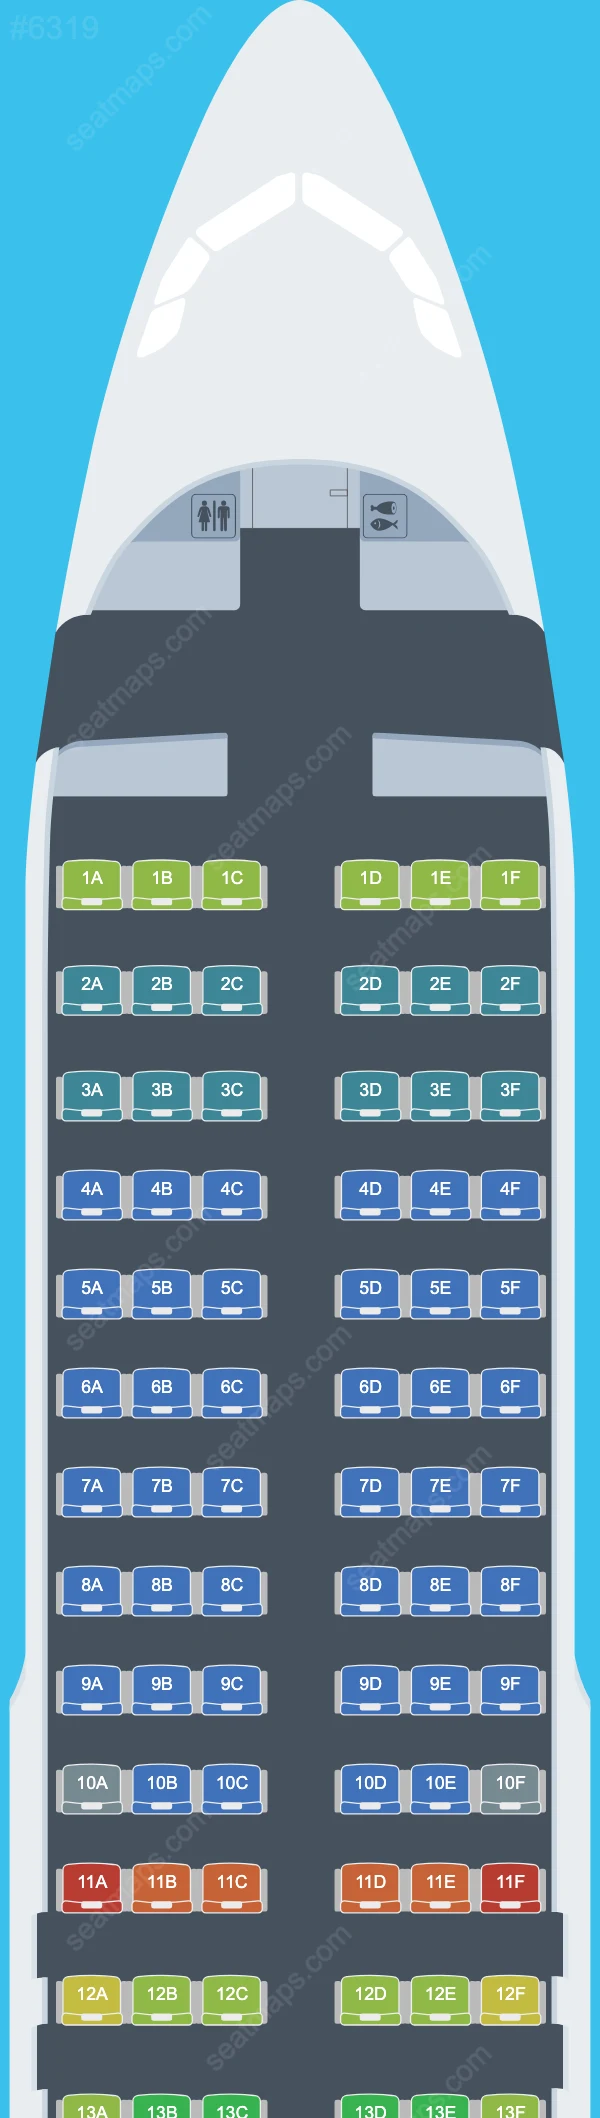 Volaris Airbus A320 Seat Maps A320-200 V.2